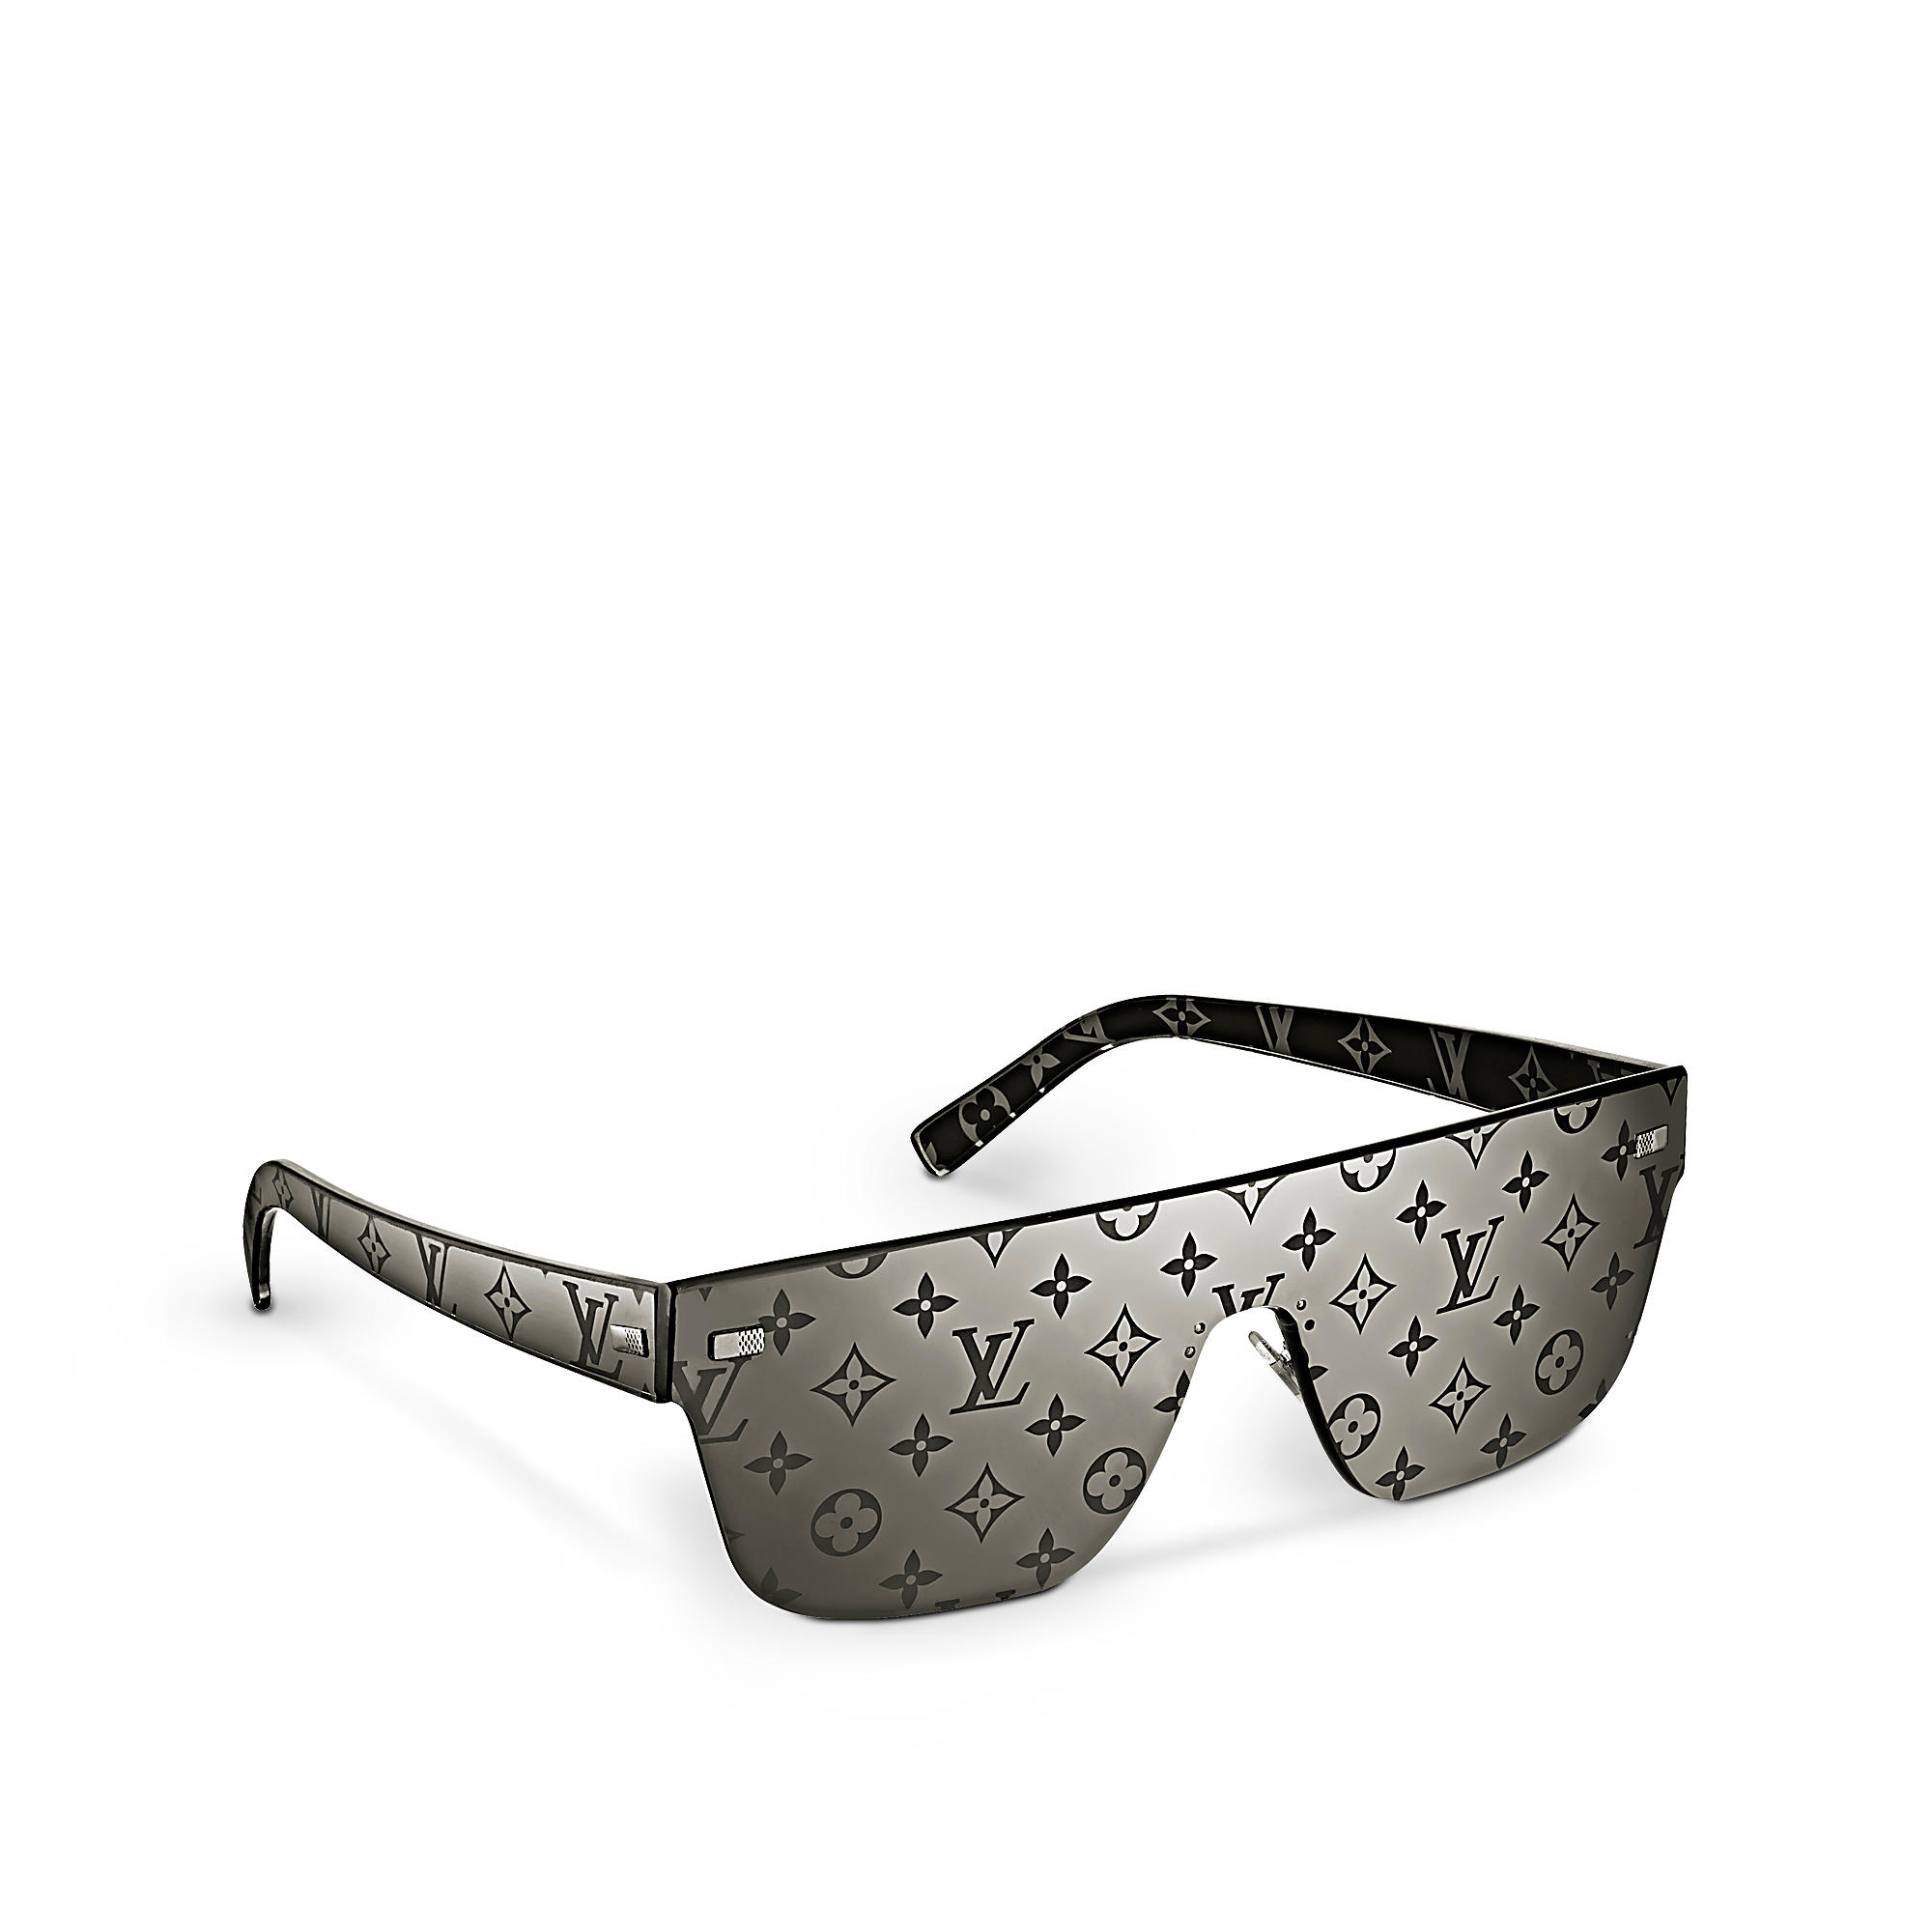 Buy Replica Louis Vuitton Monogrammed Face Mask - Buy Designer Bags,  Sunglasses, Shoes, Clothing, Headphone & Earphone, Watch - KKMall